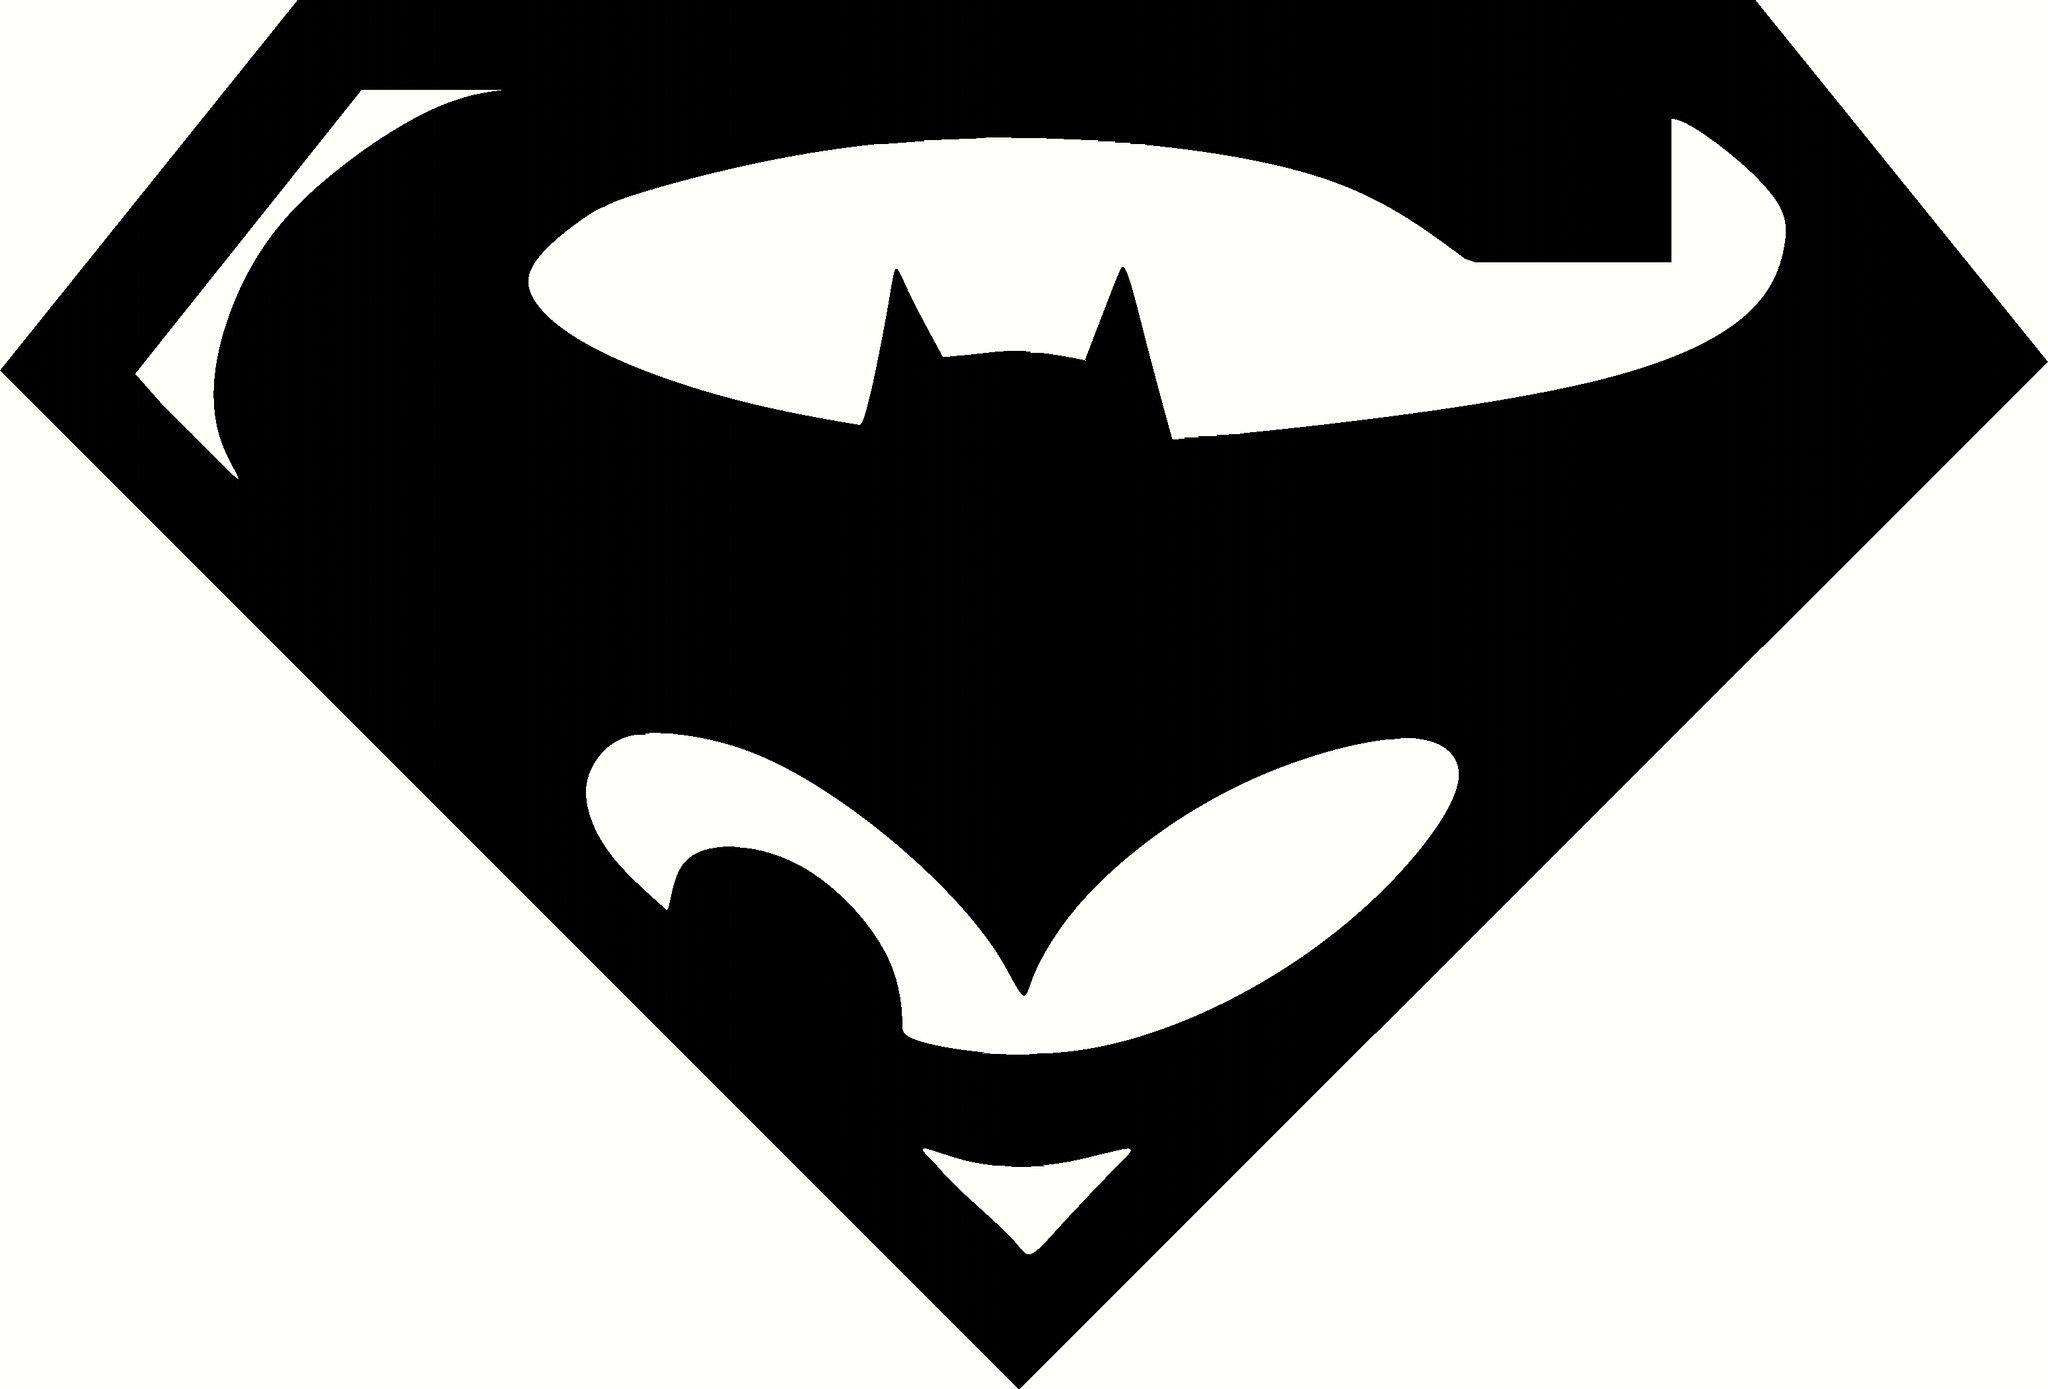 Super Bat Logo - Super Bat Logo Vinyl Decal Graphic Your Color And Size